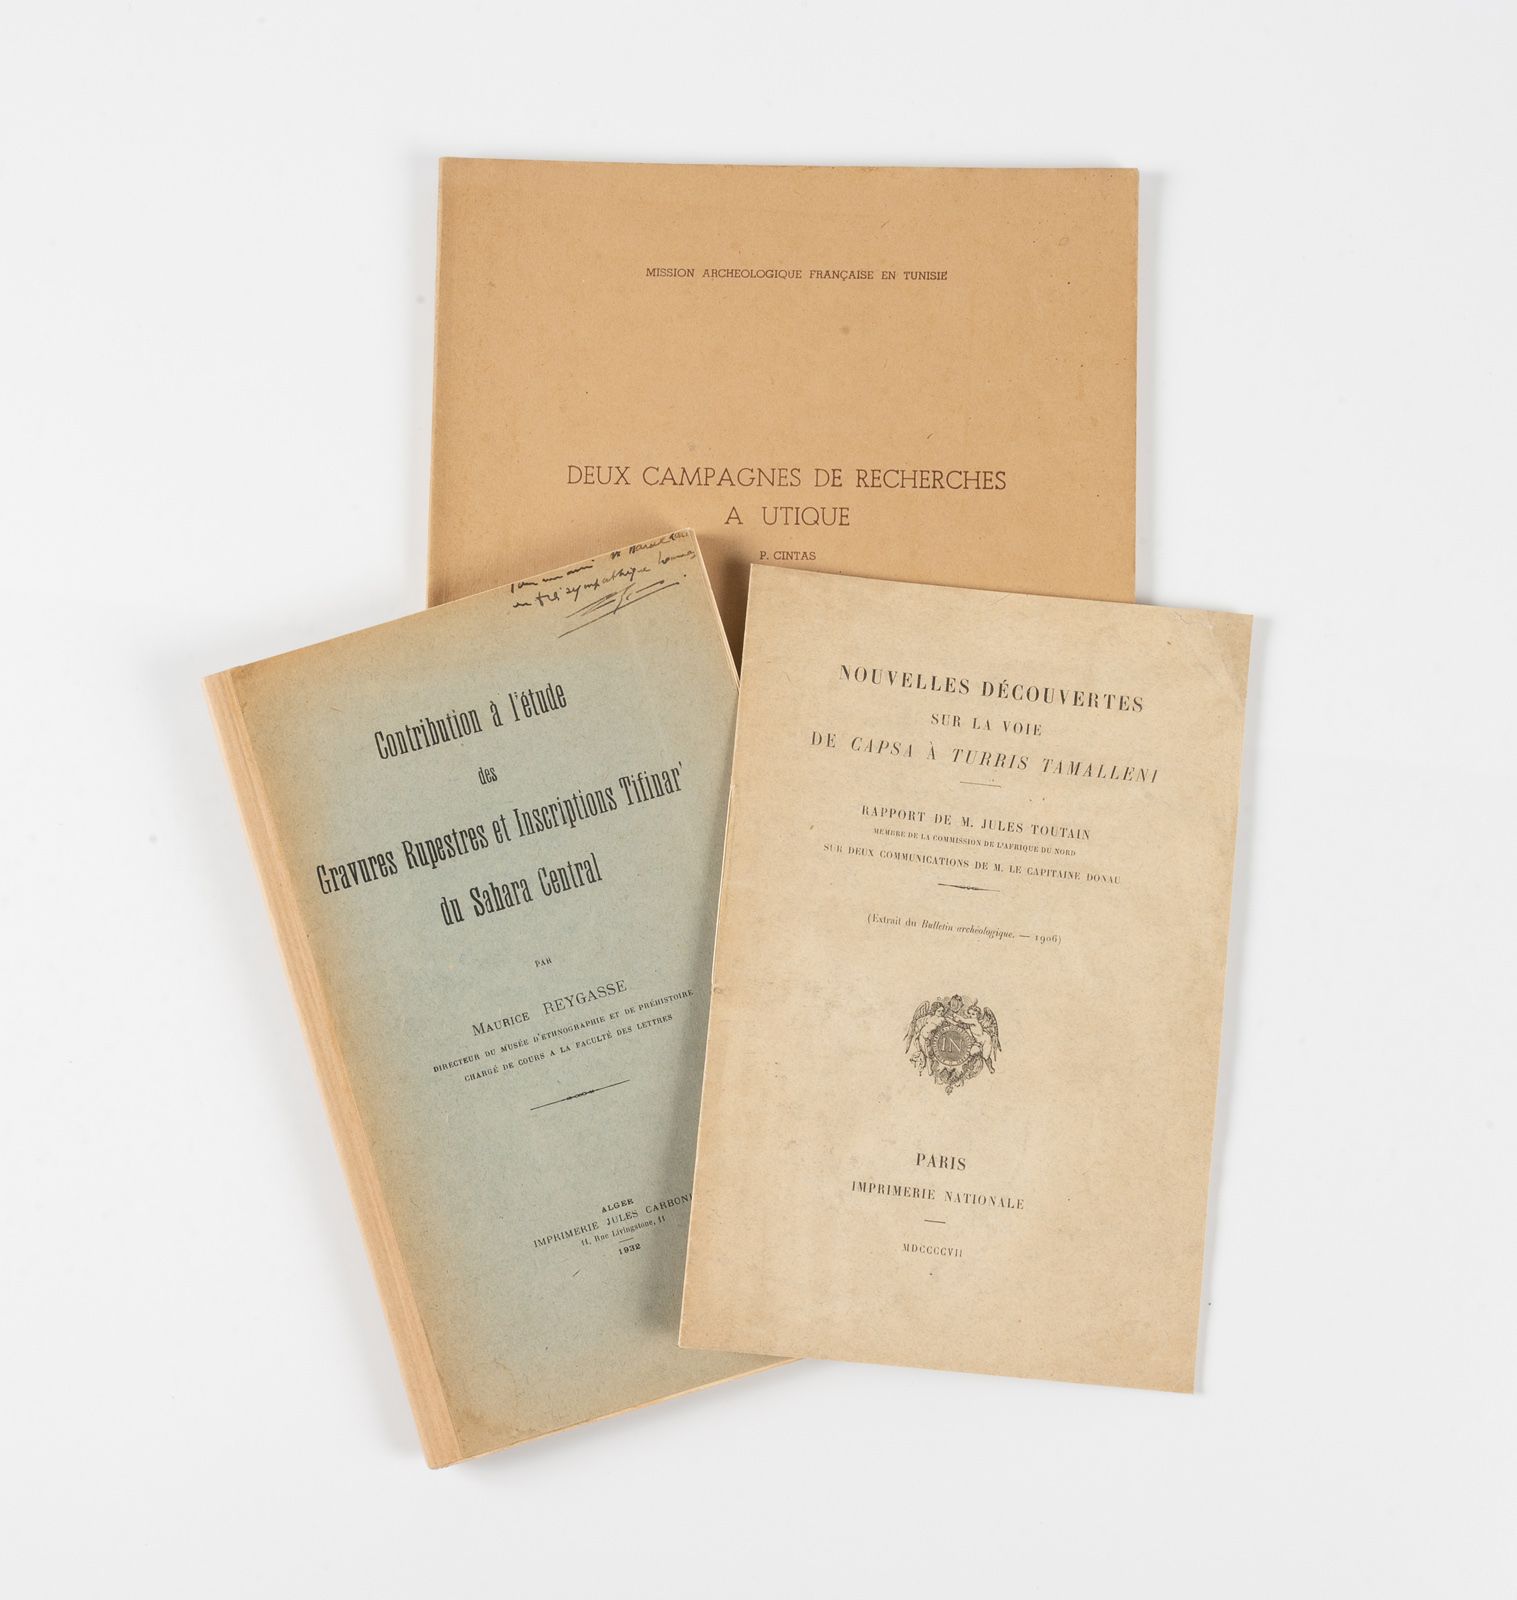 CINTAS (P.). CINTAS（P.）。
在Utique的两次研究活动。 
法国驻突尼斯考古团，1951年。4开本，平装本。
附有2个8开的小册子： 
&hellip;